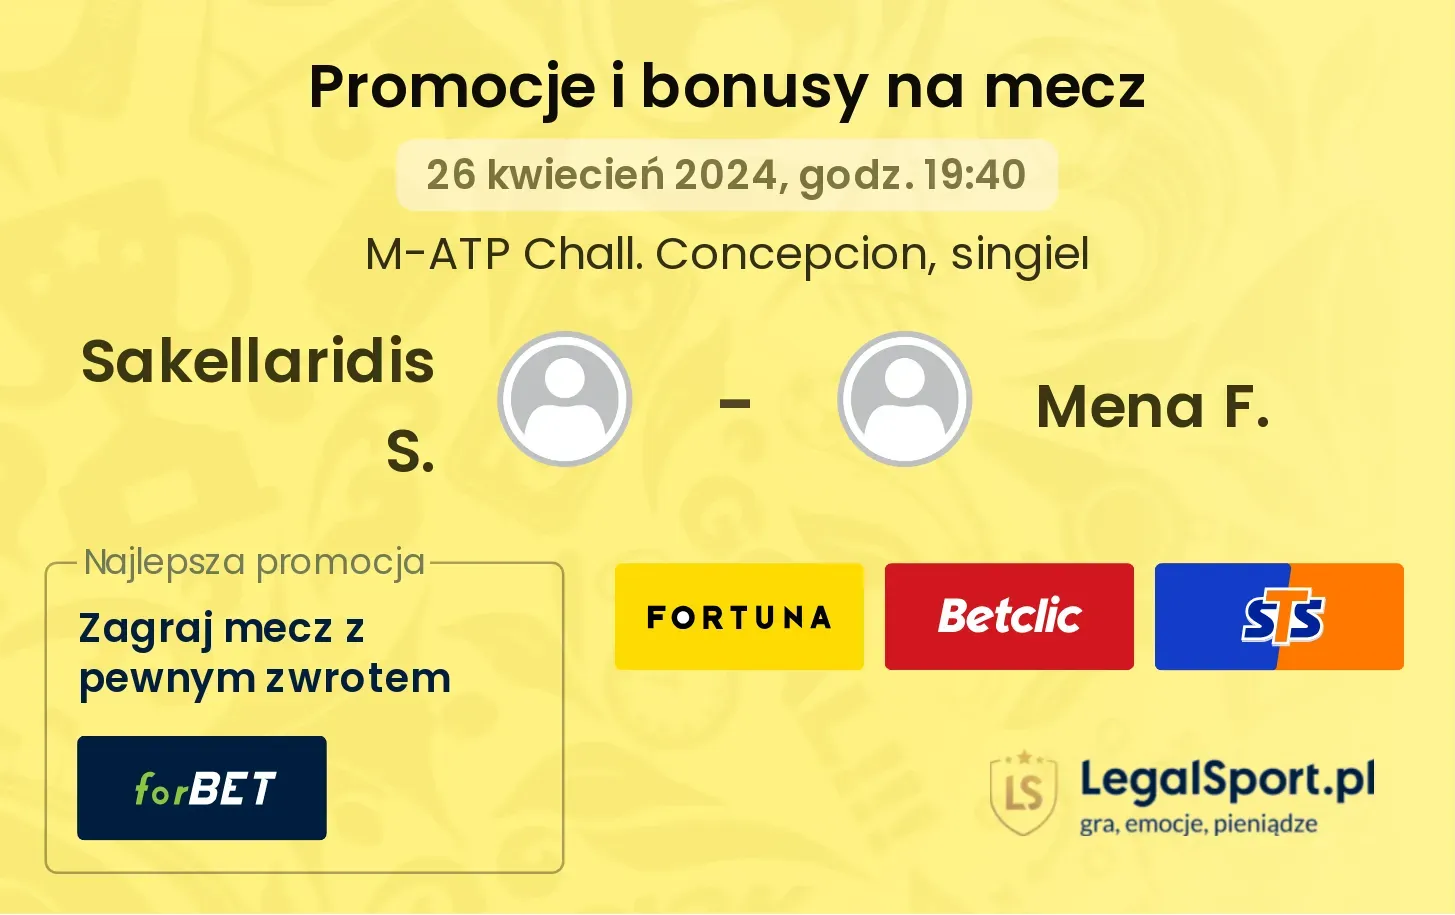 Sakellaridis S. - Mena F. promocje bonusy na mecz